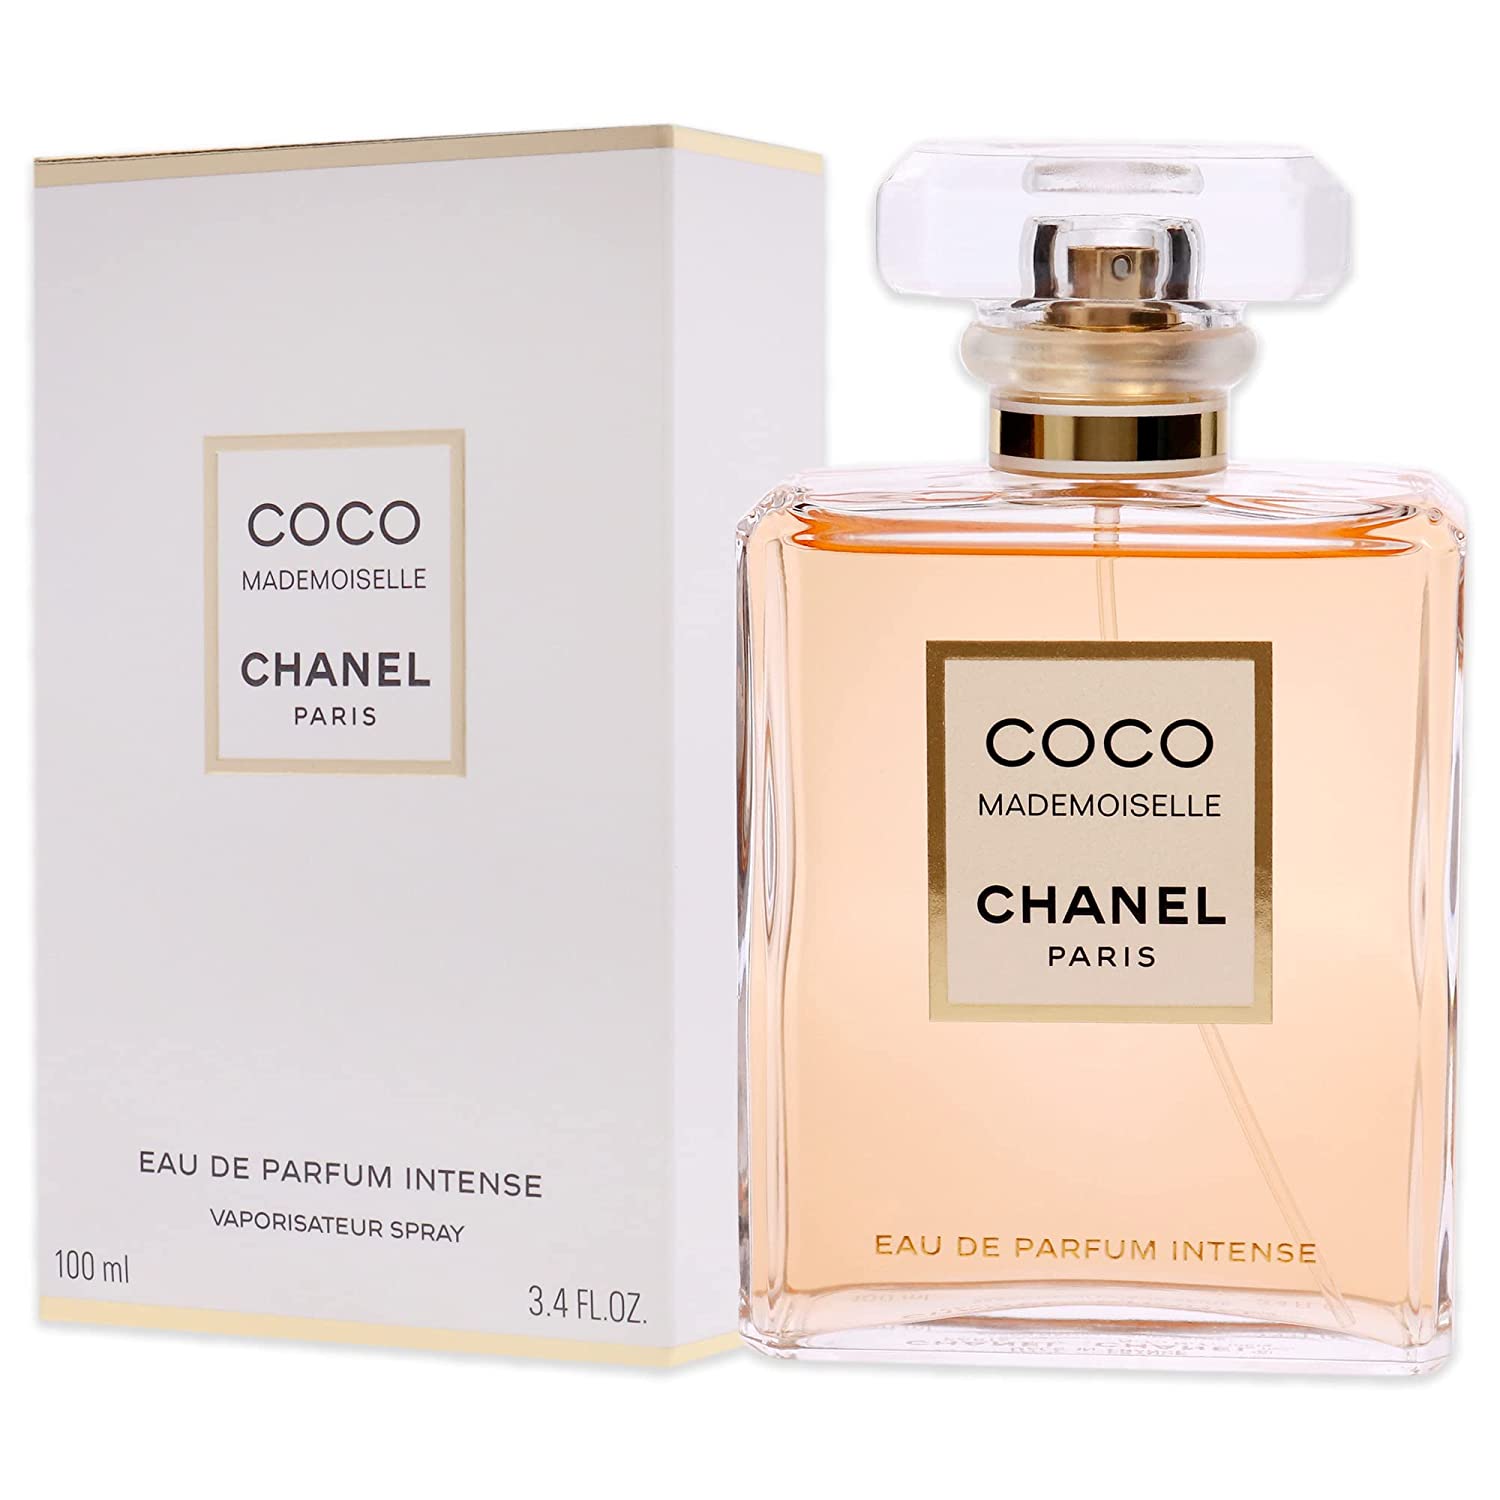 perfumes like coco mademoiselle